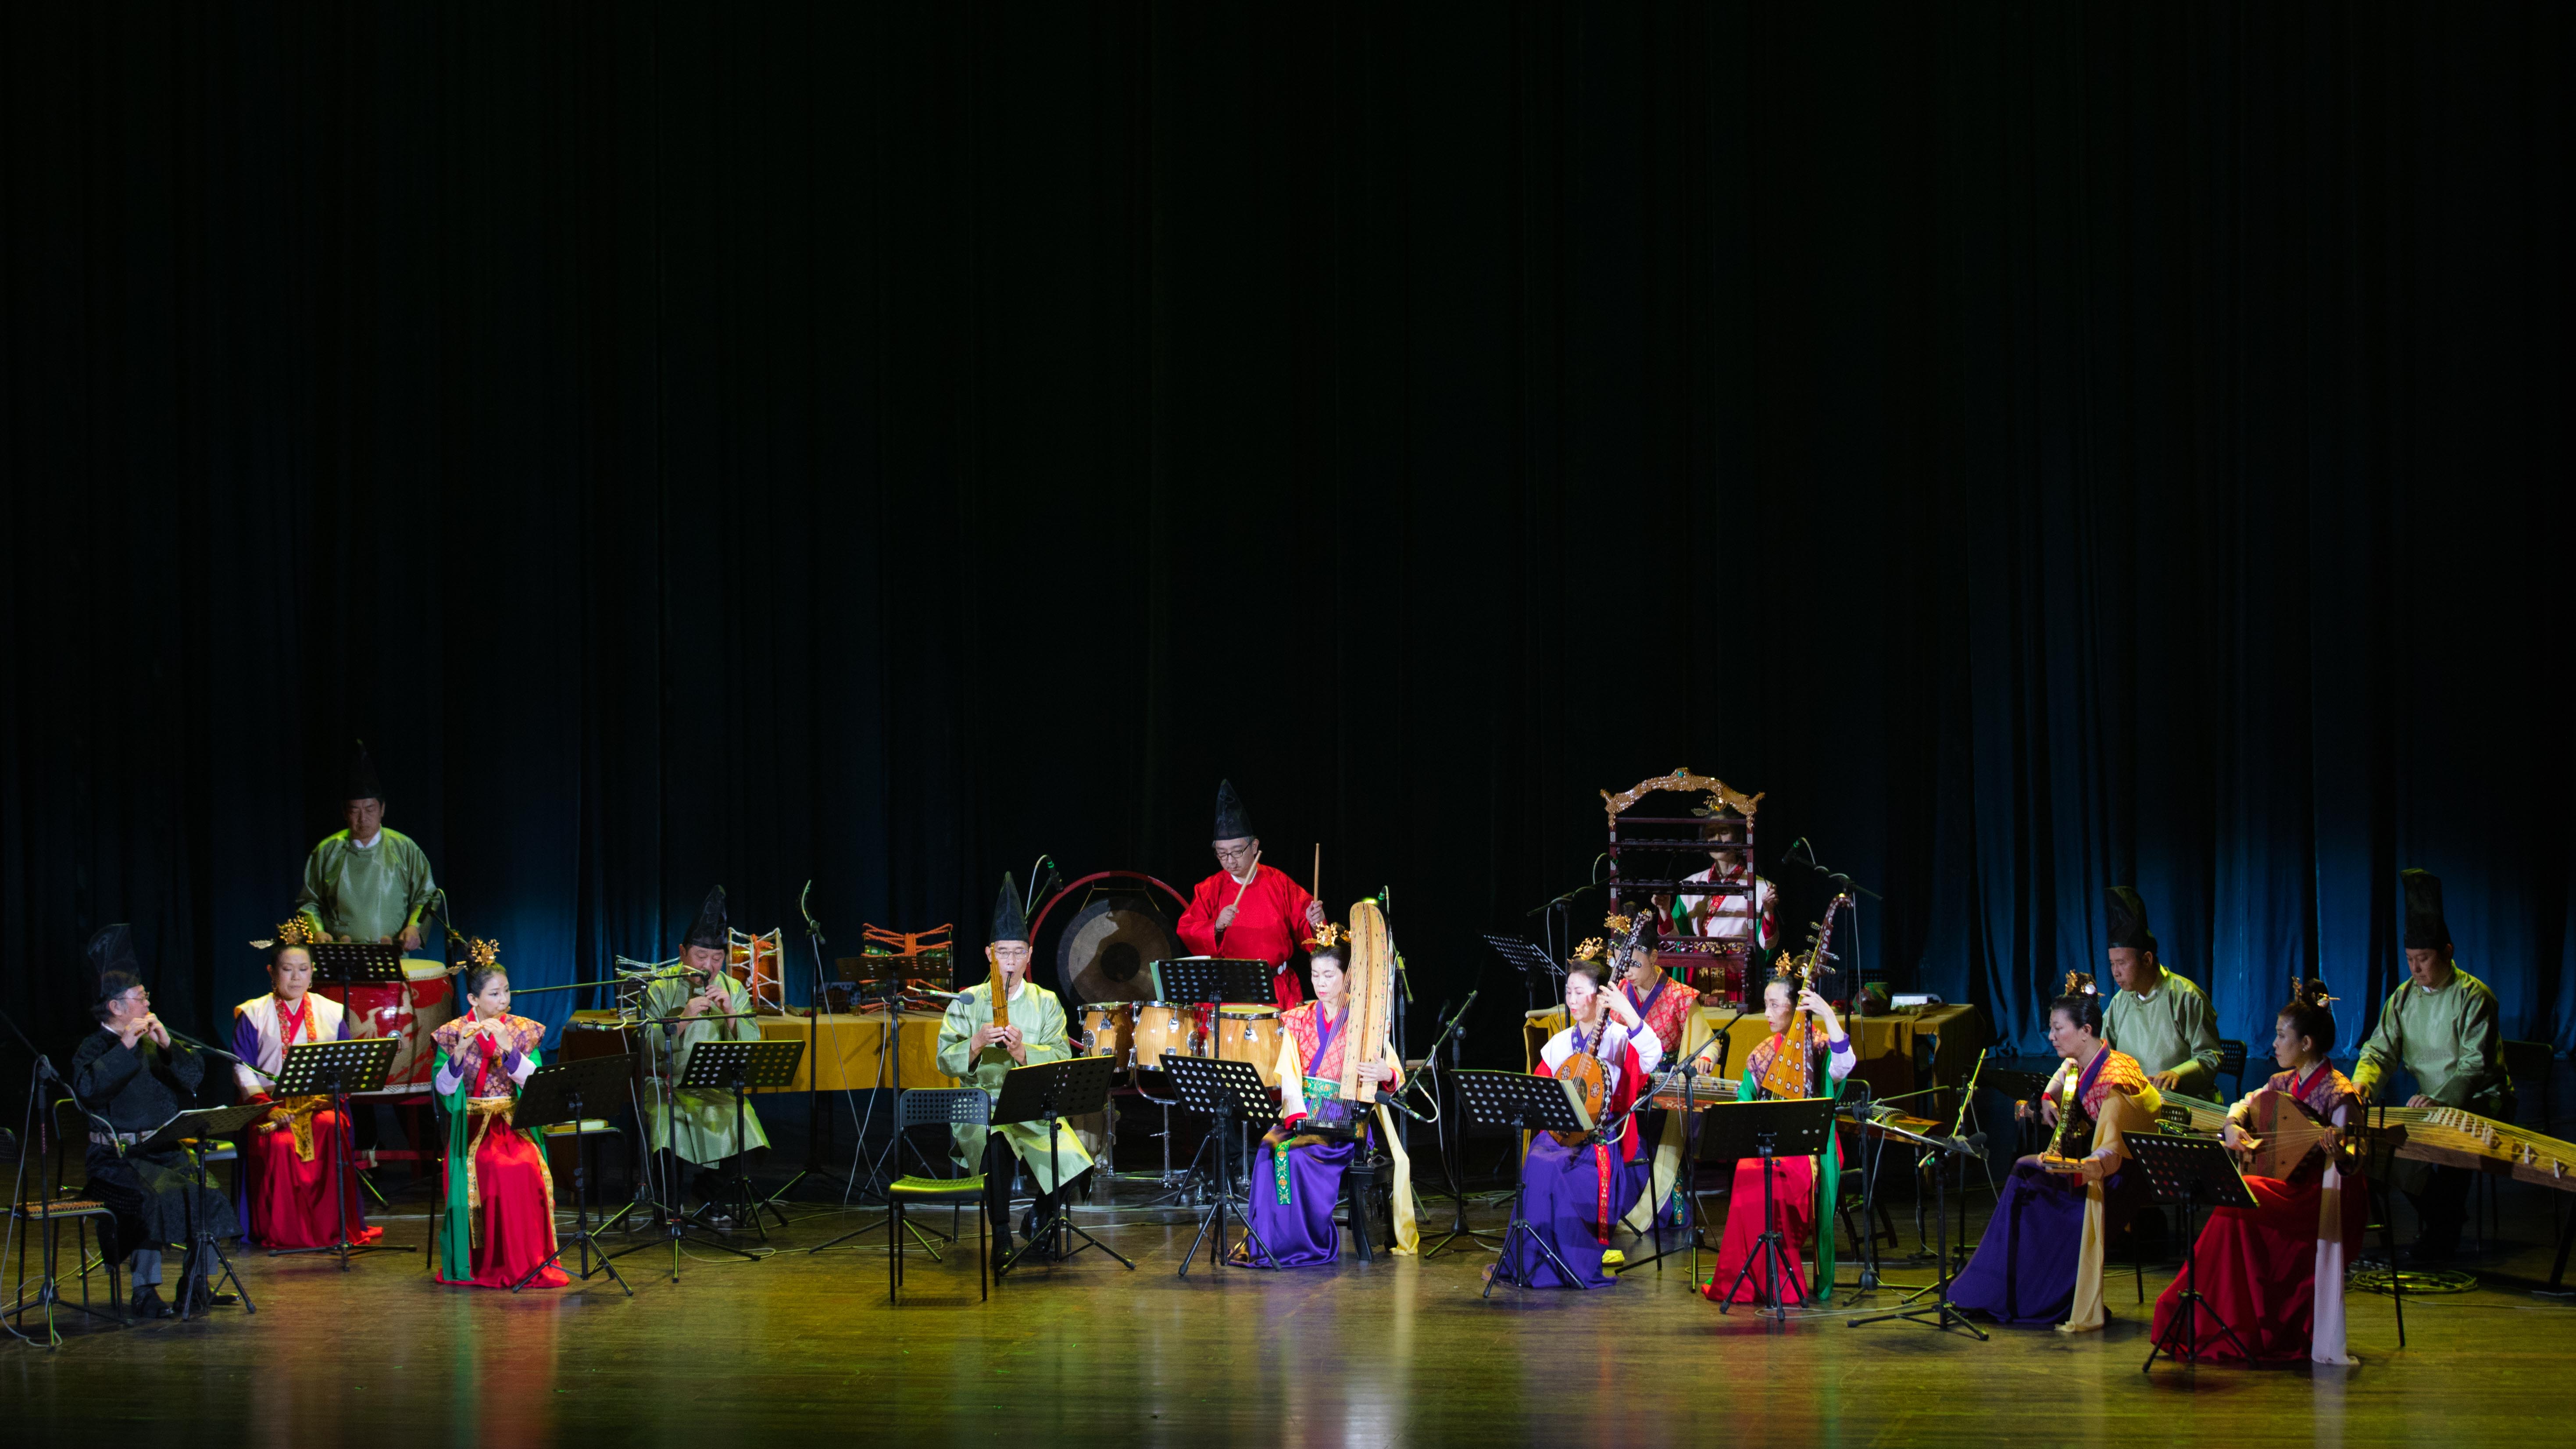 中国海口市で正倉院復元楽器の音楽会 中日韓の音楽家が共演